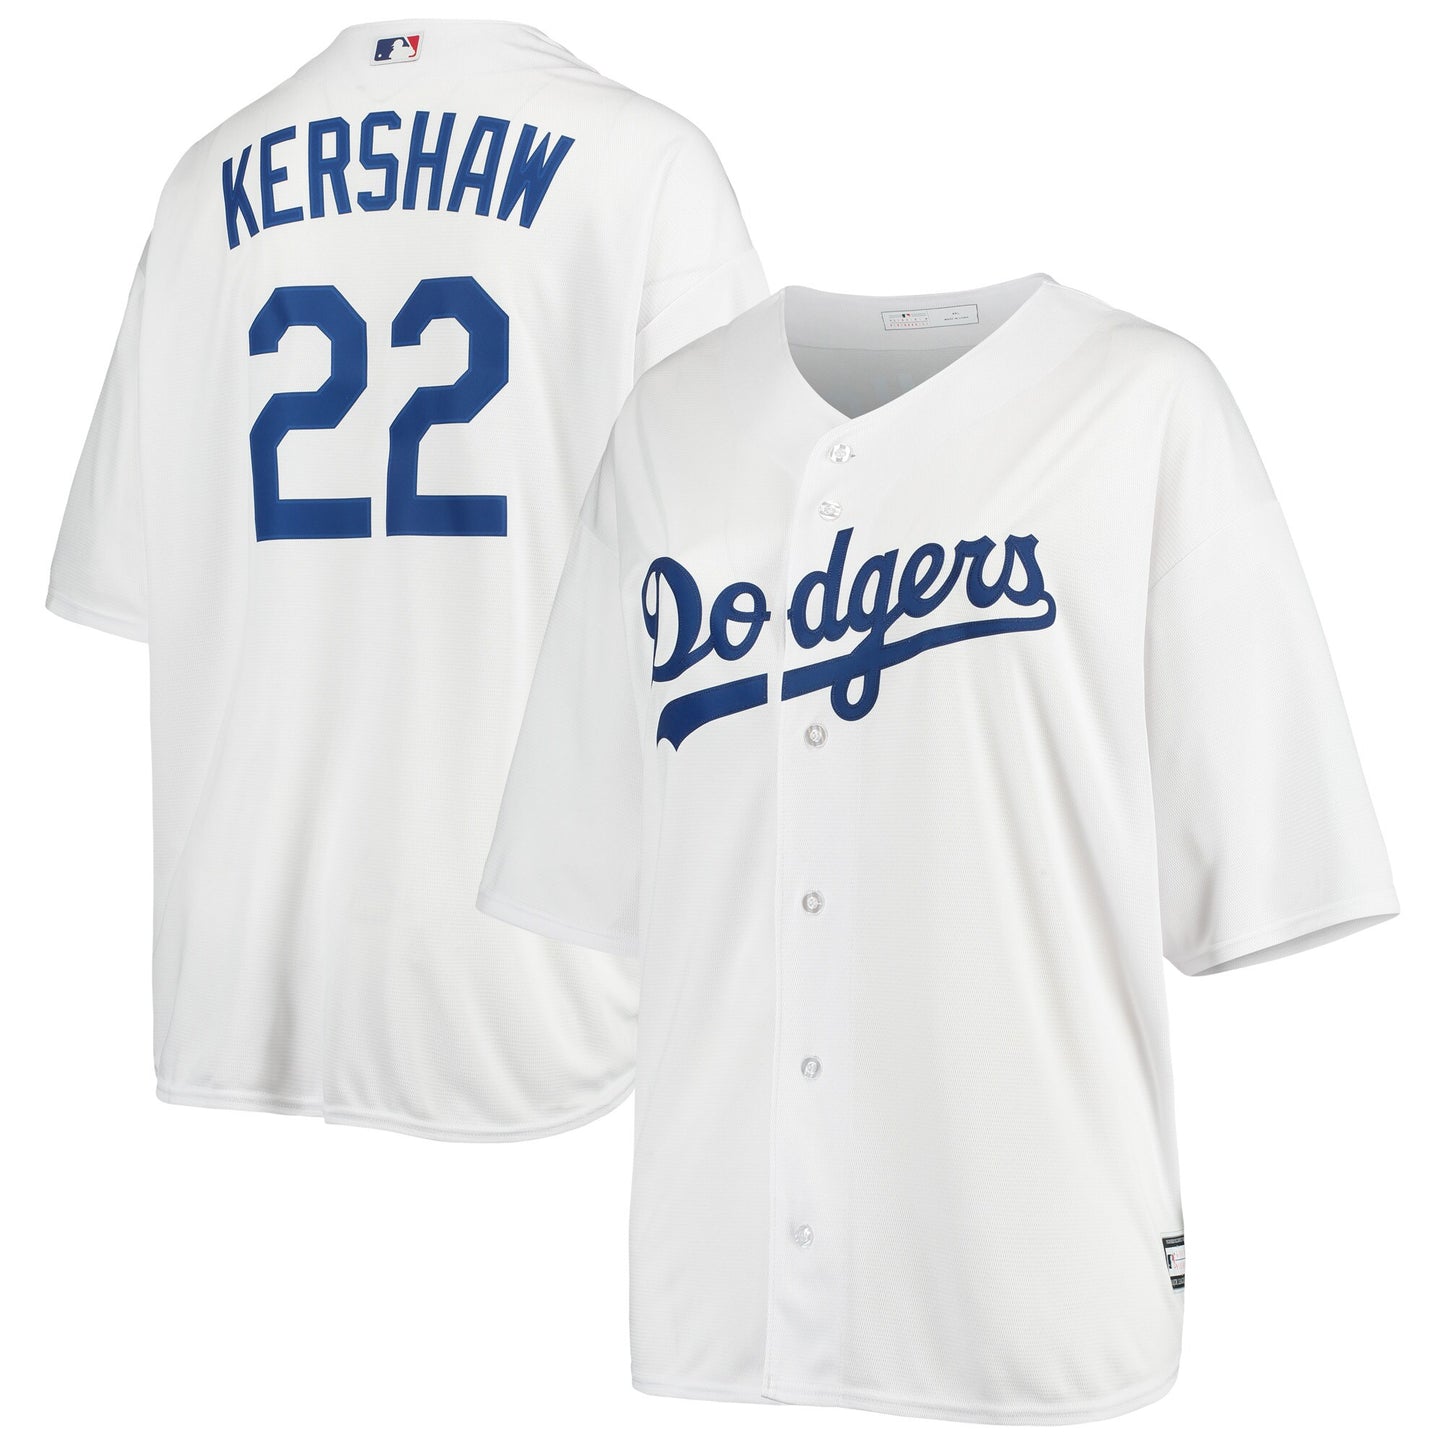 Clayton Kershaw Los Angeles Dodgers Women's Plus Size Replica Player Jersey - White